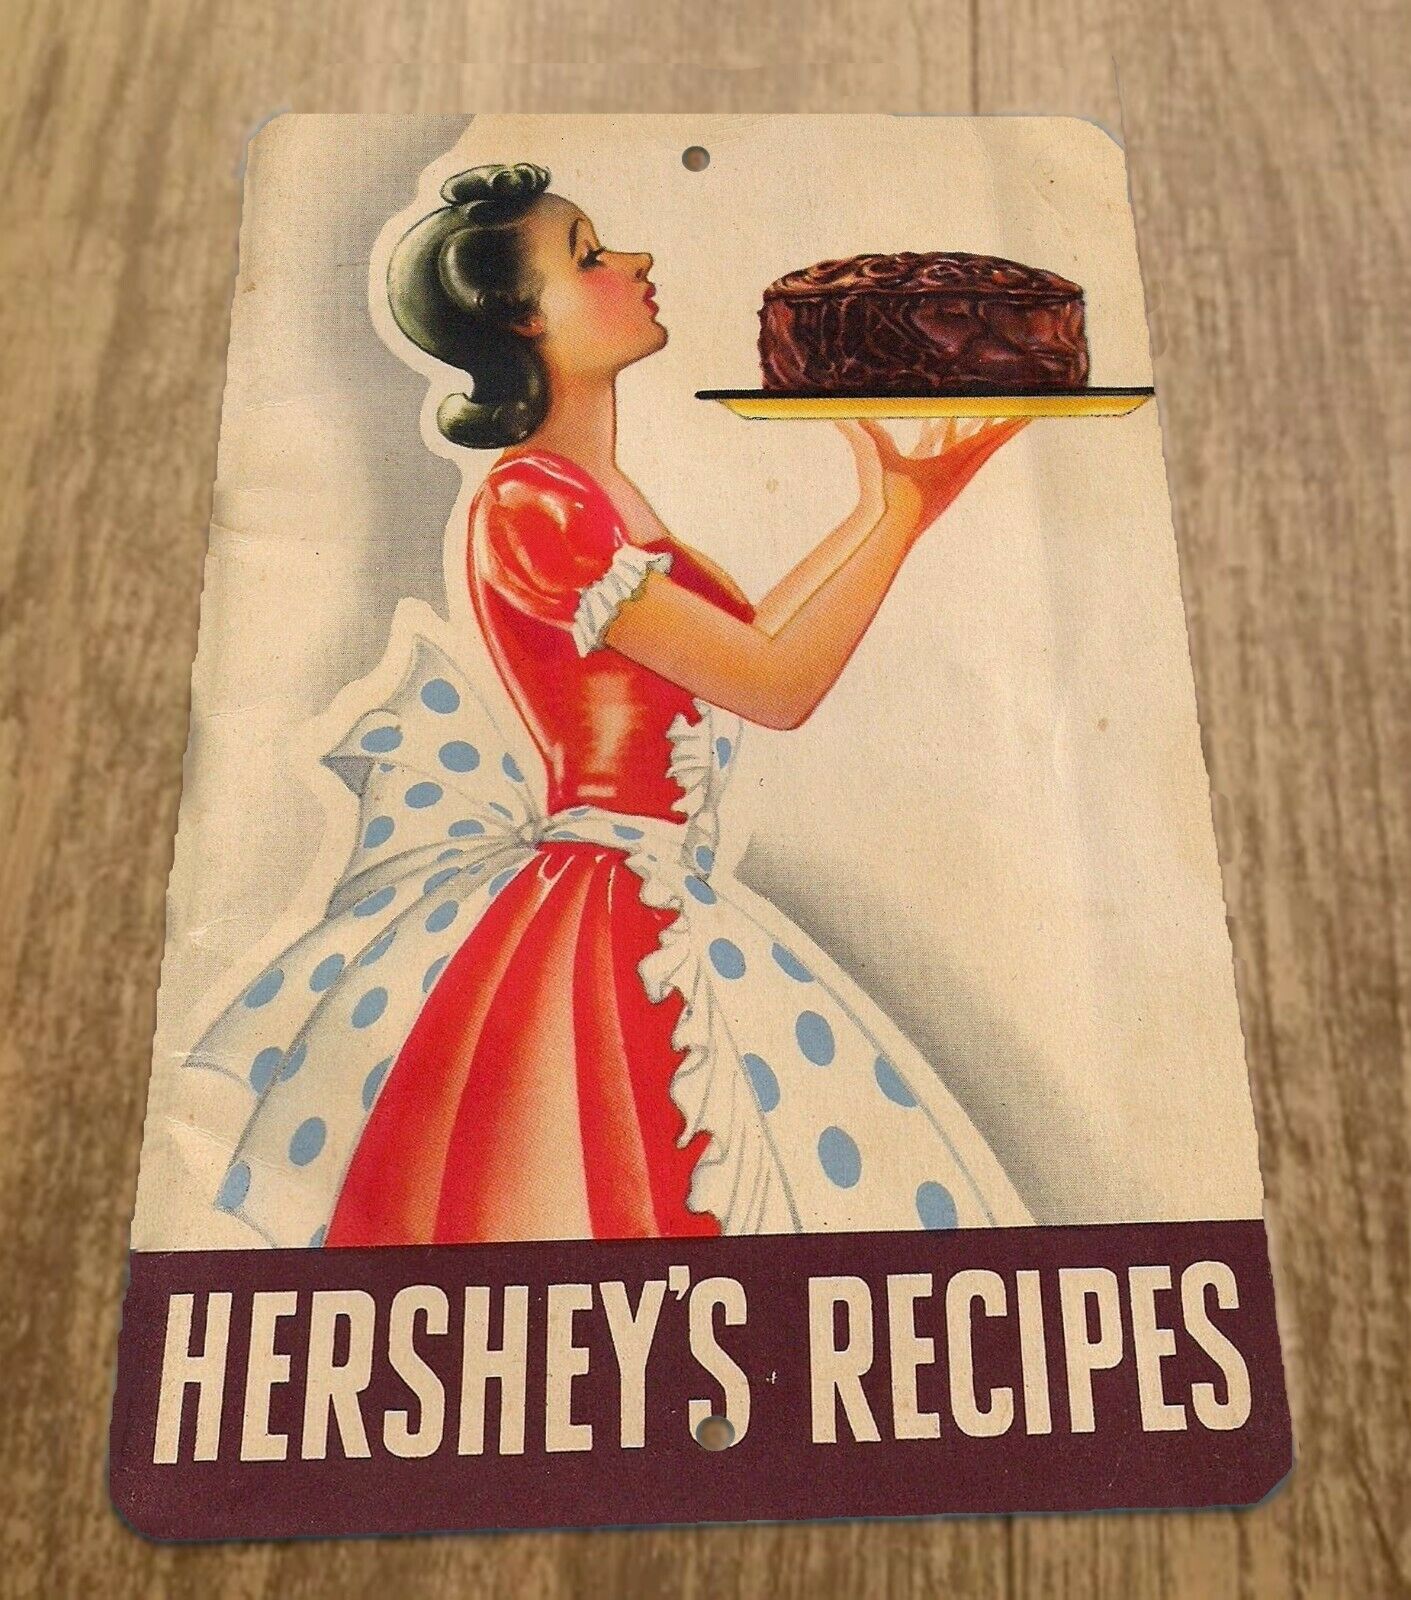 Hersheys Recipes Kitchen 8x12 Metal Wall Vintage Misc Poster Sign